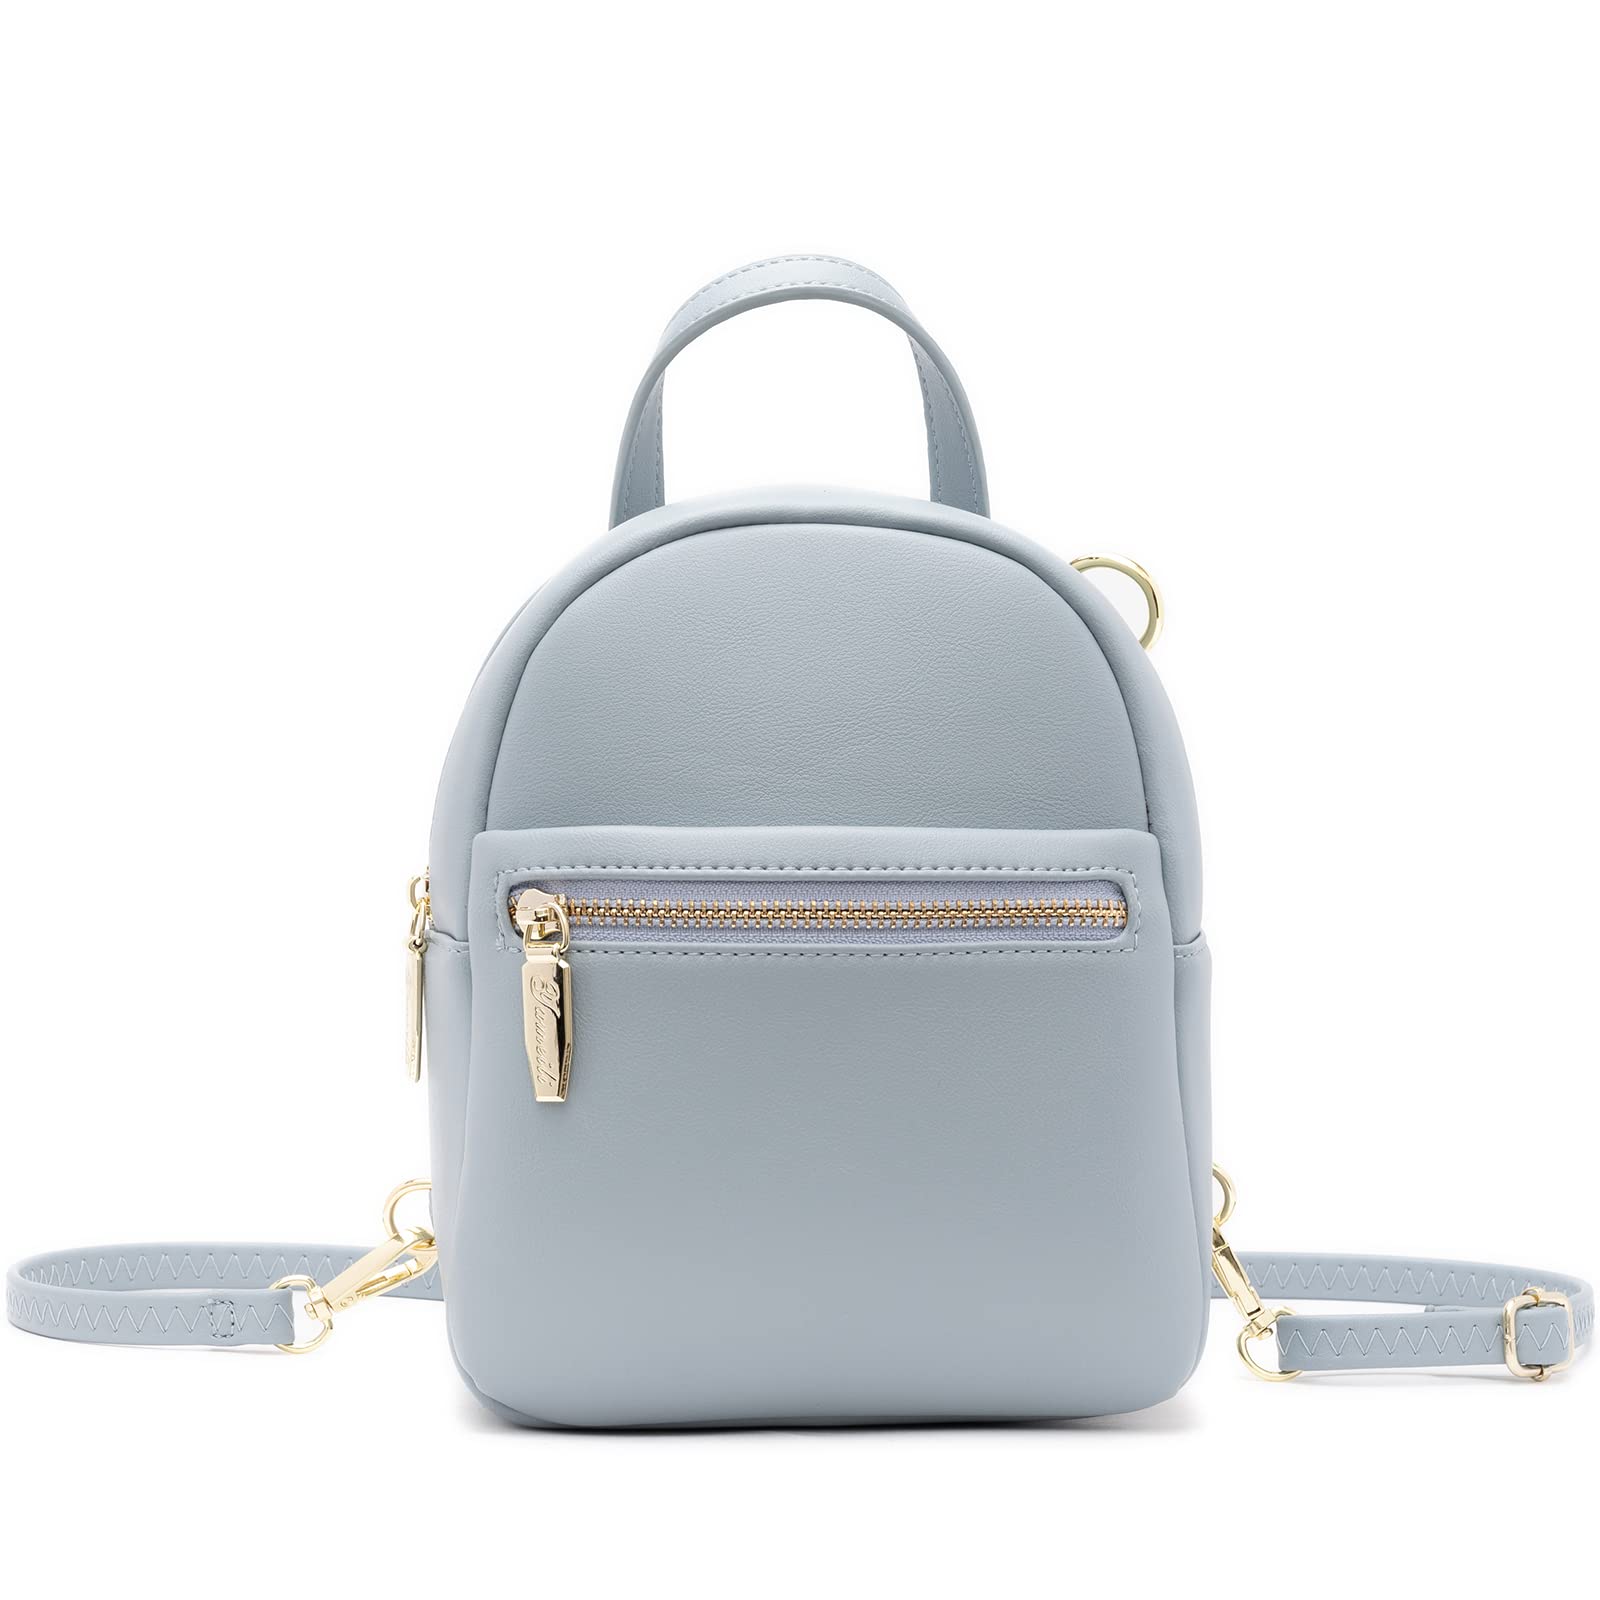 Amazon.com | Girls Cute Mini Backpack Purse Fashion School Bags PU Leather  Casual Backpack for Teens Women (Heather) | Kids' Backpacks